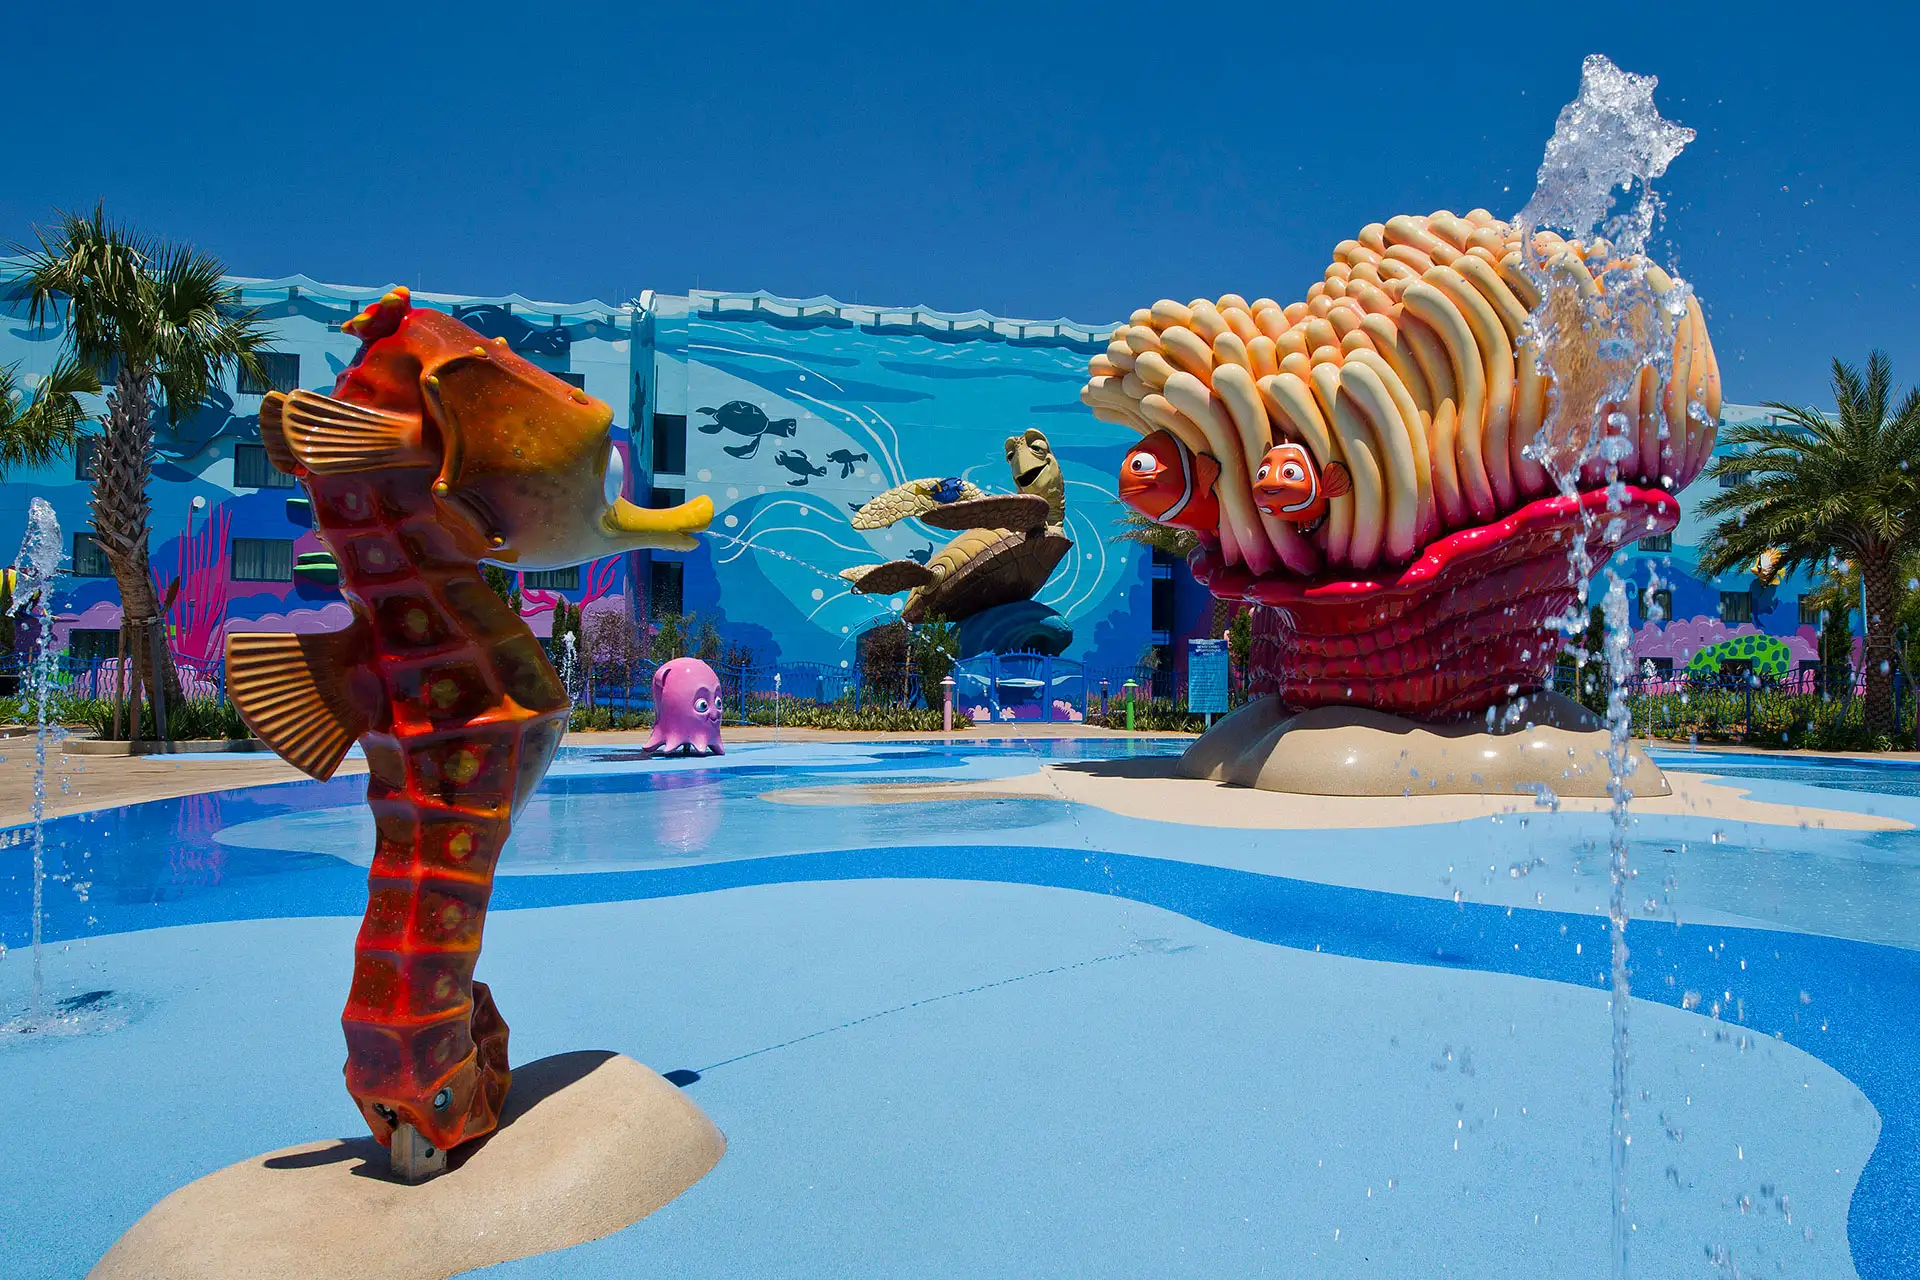 Big Blue Pool at Disney's Art of Animation Resort in Florida